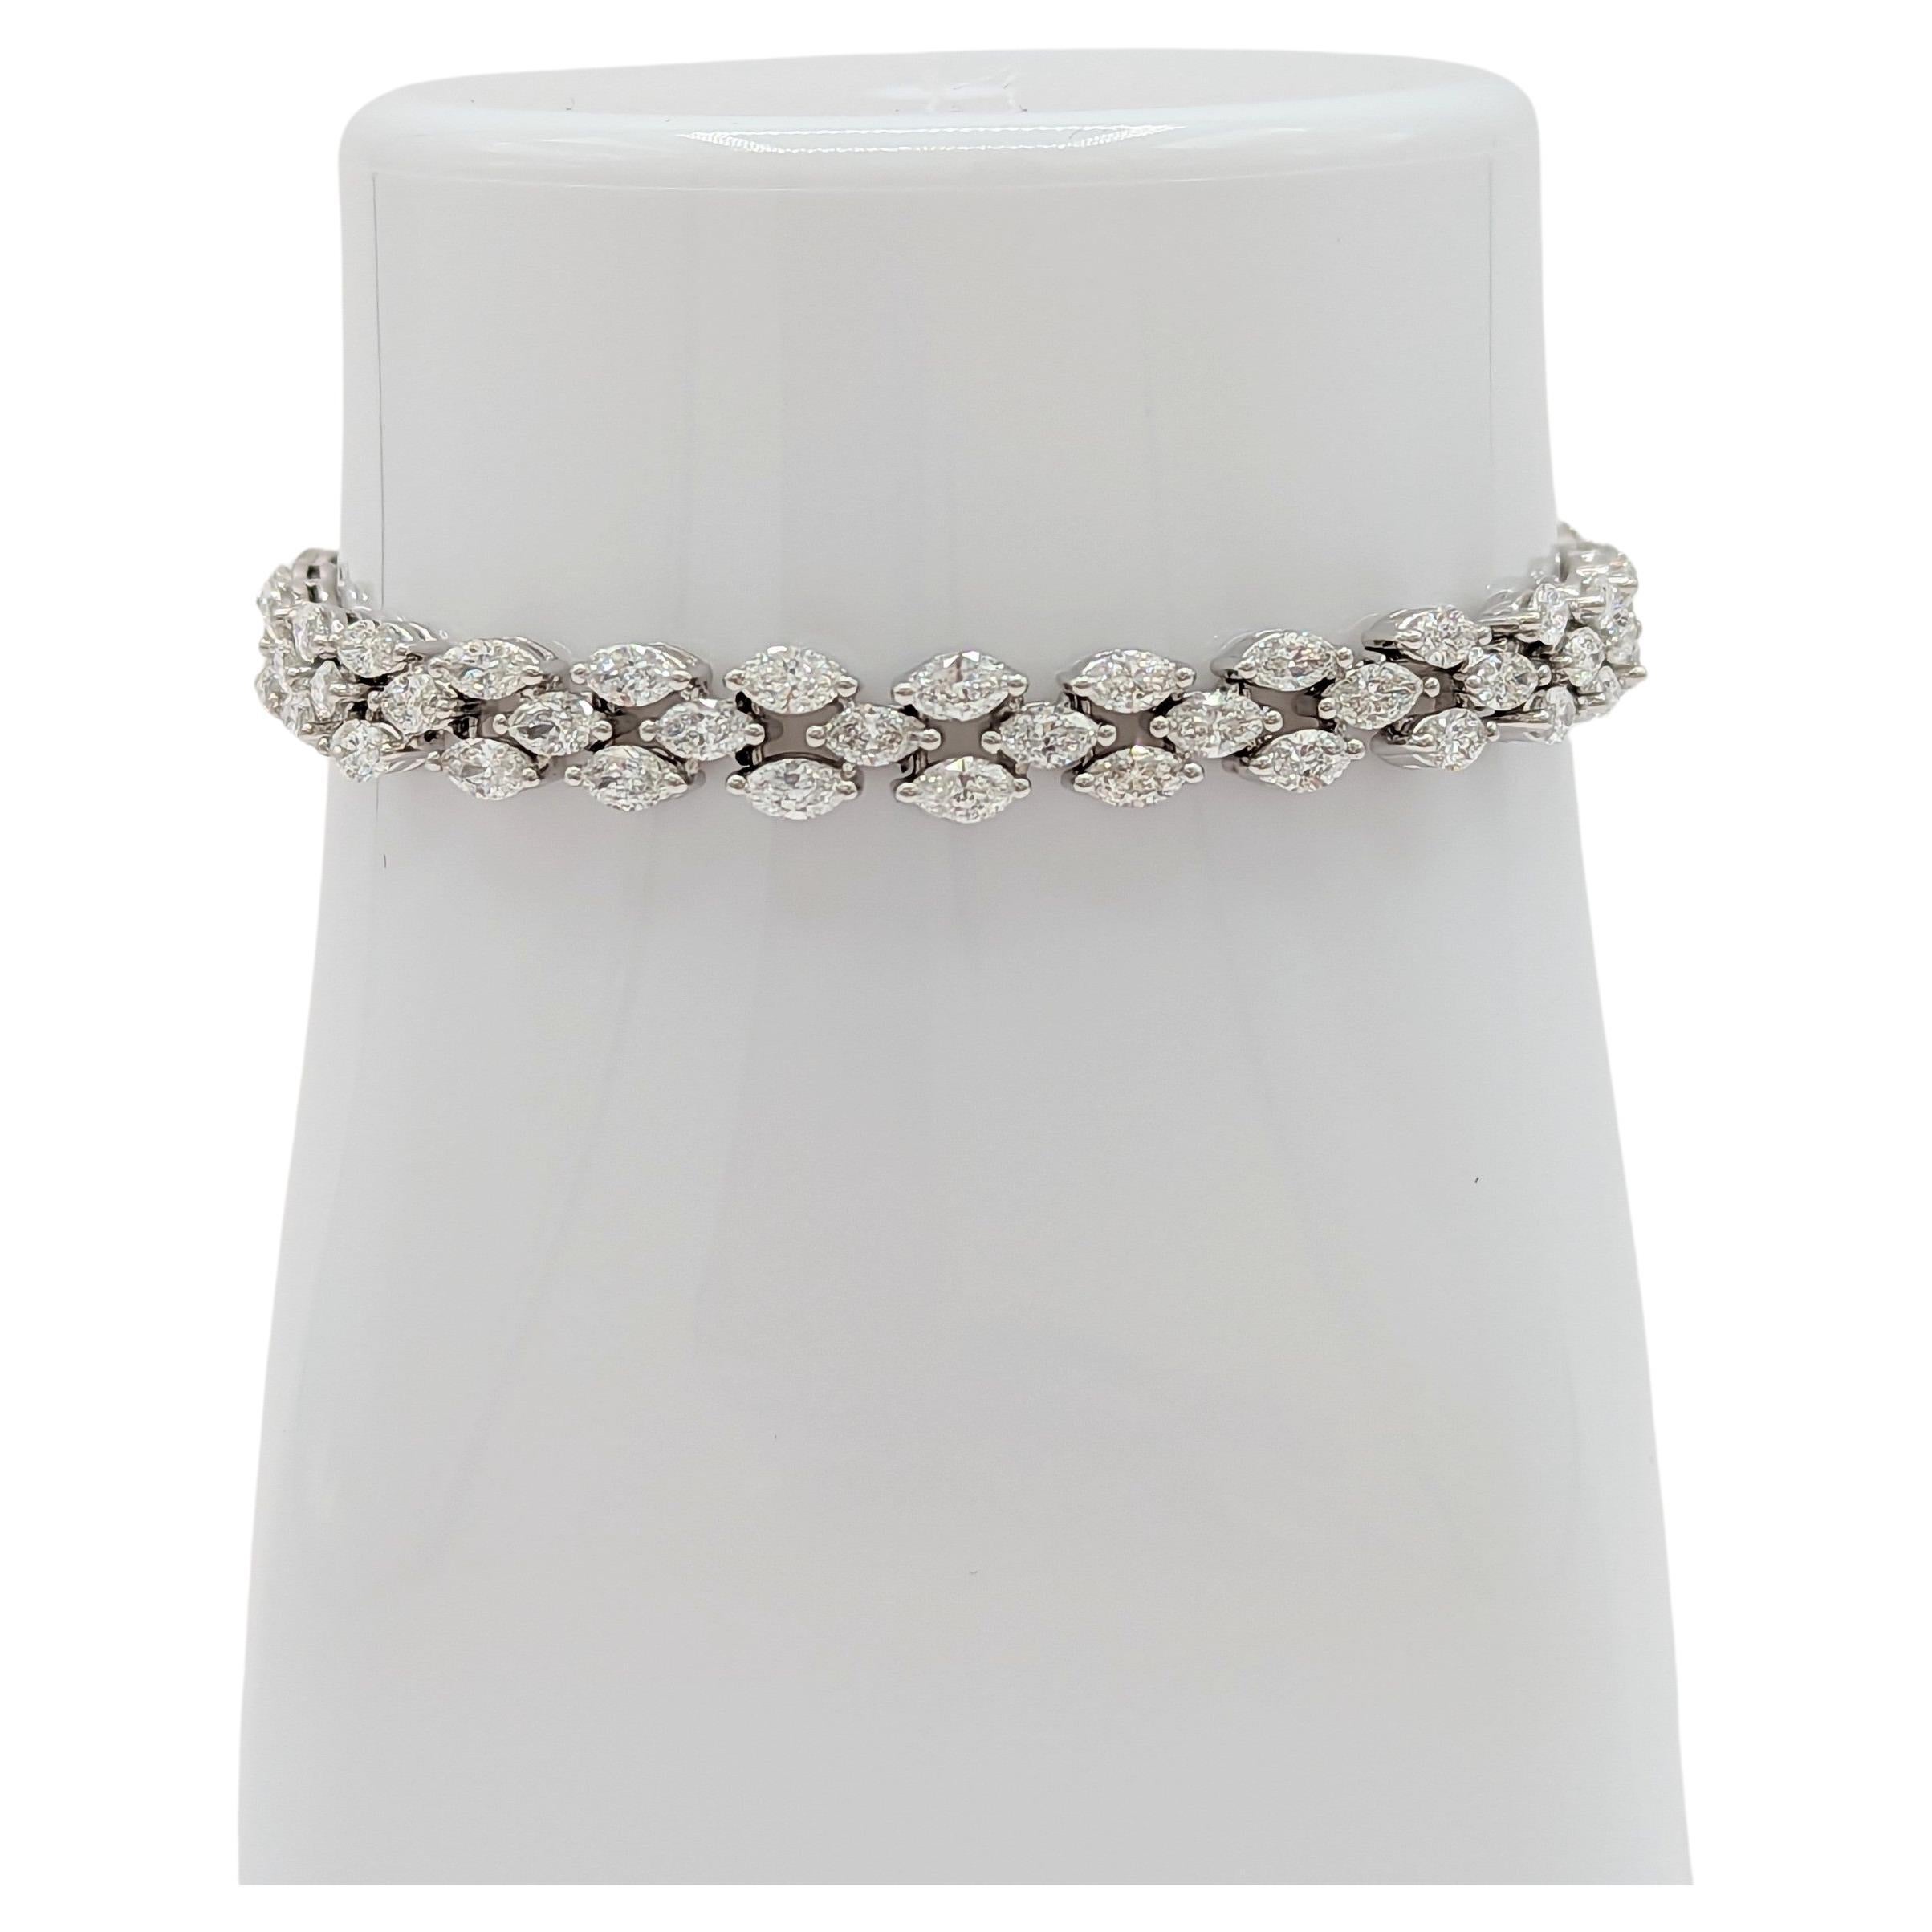 White Diamond Marquise Bracelet in 14K White Gold